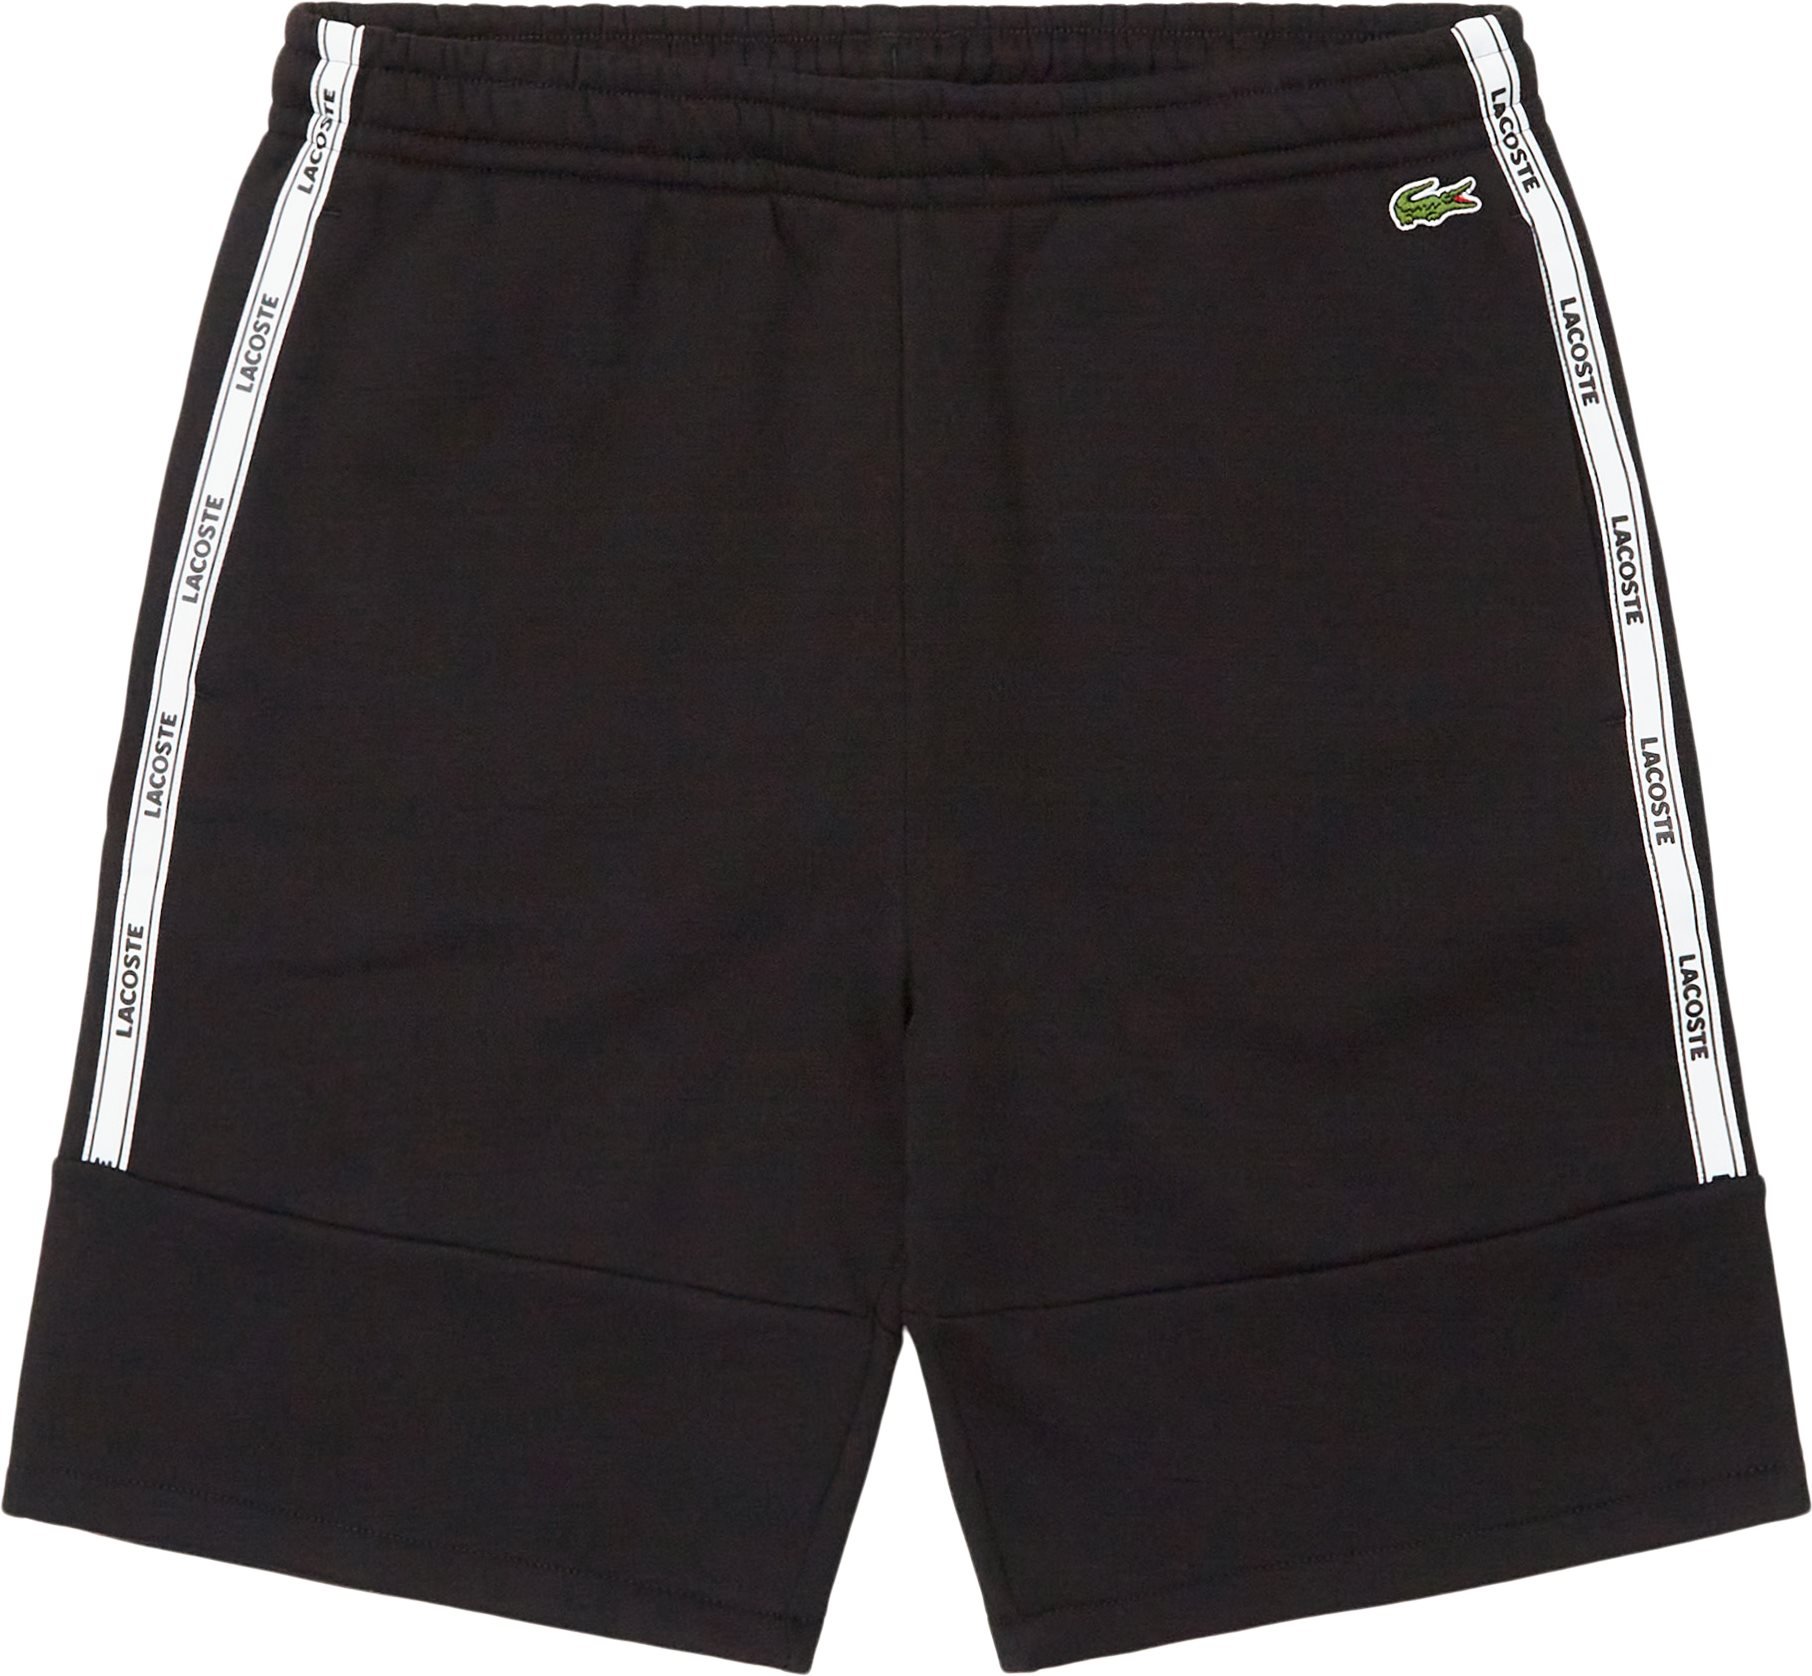 Gh1201 Sweatshorts - Shorts - Regular fit - Black